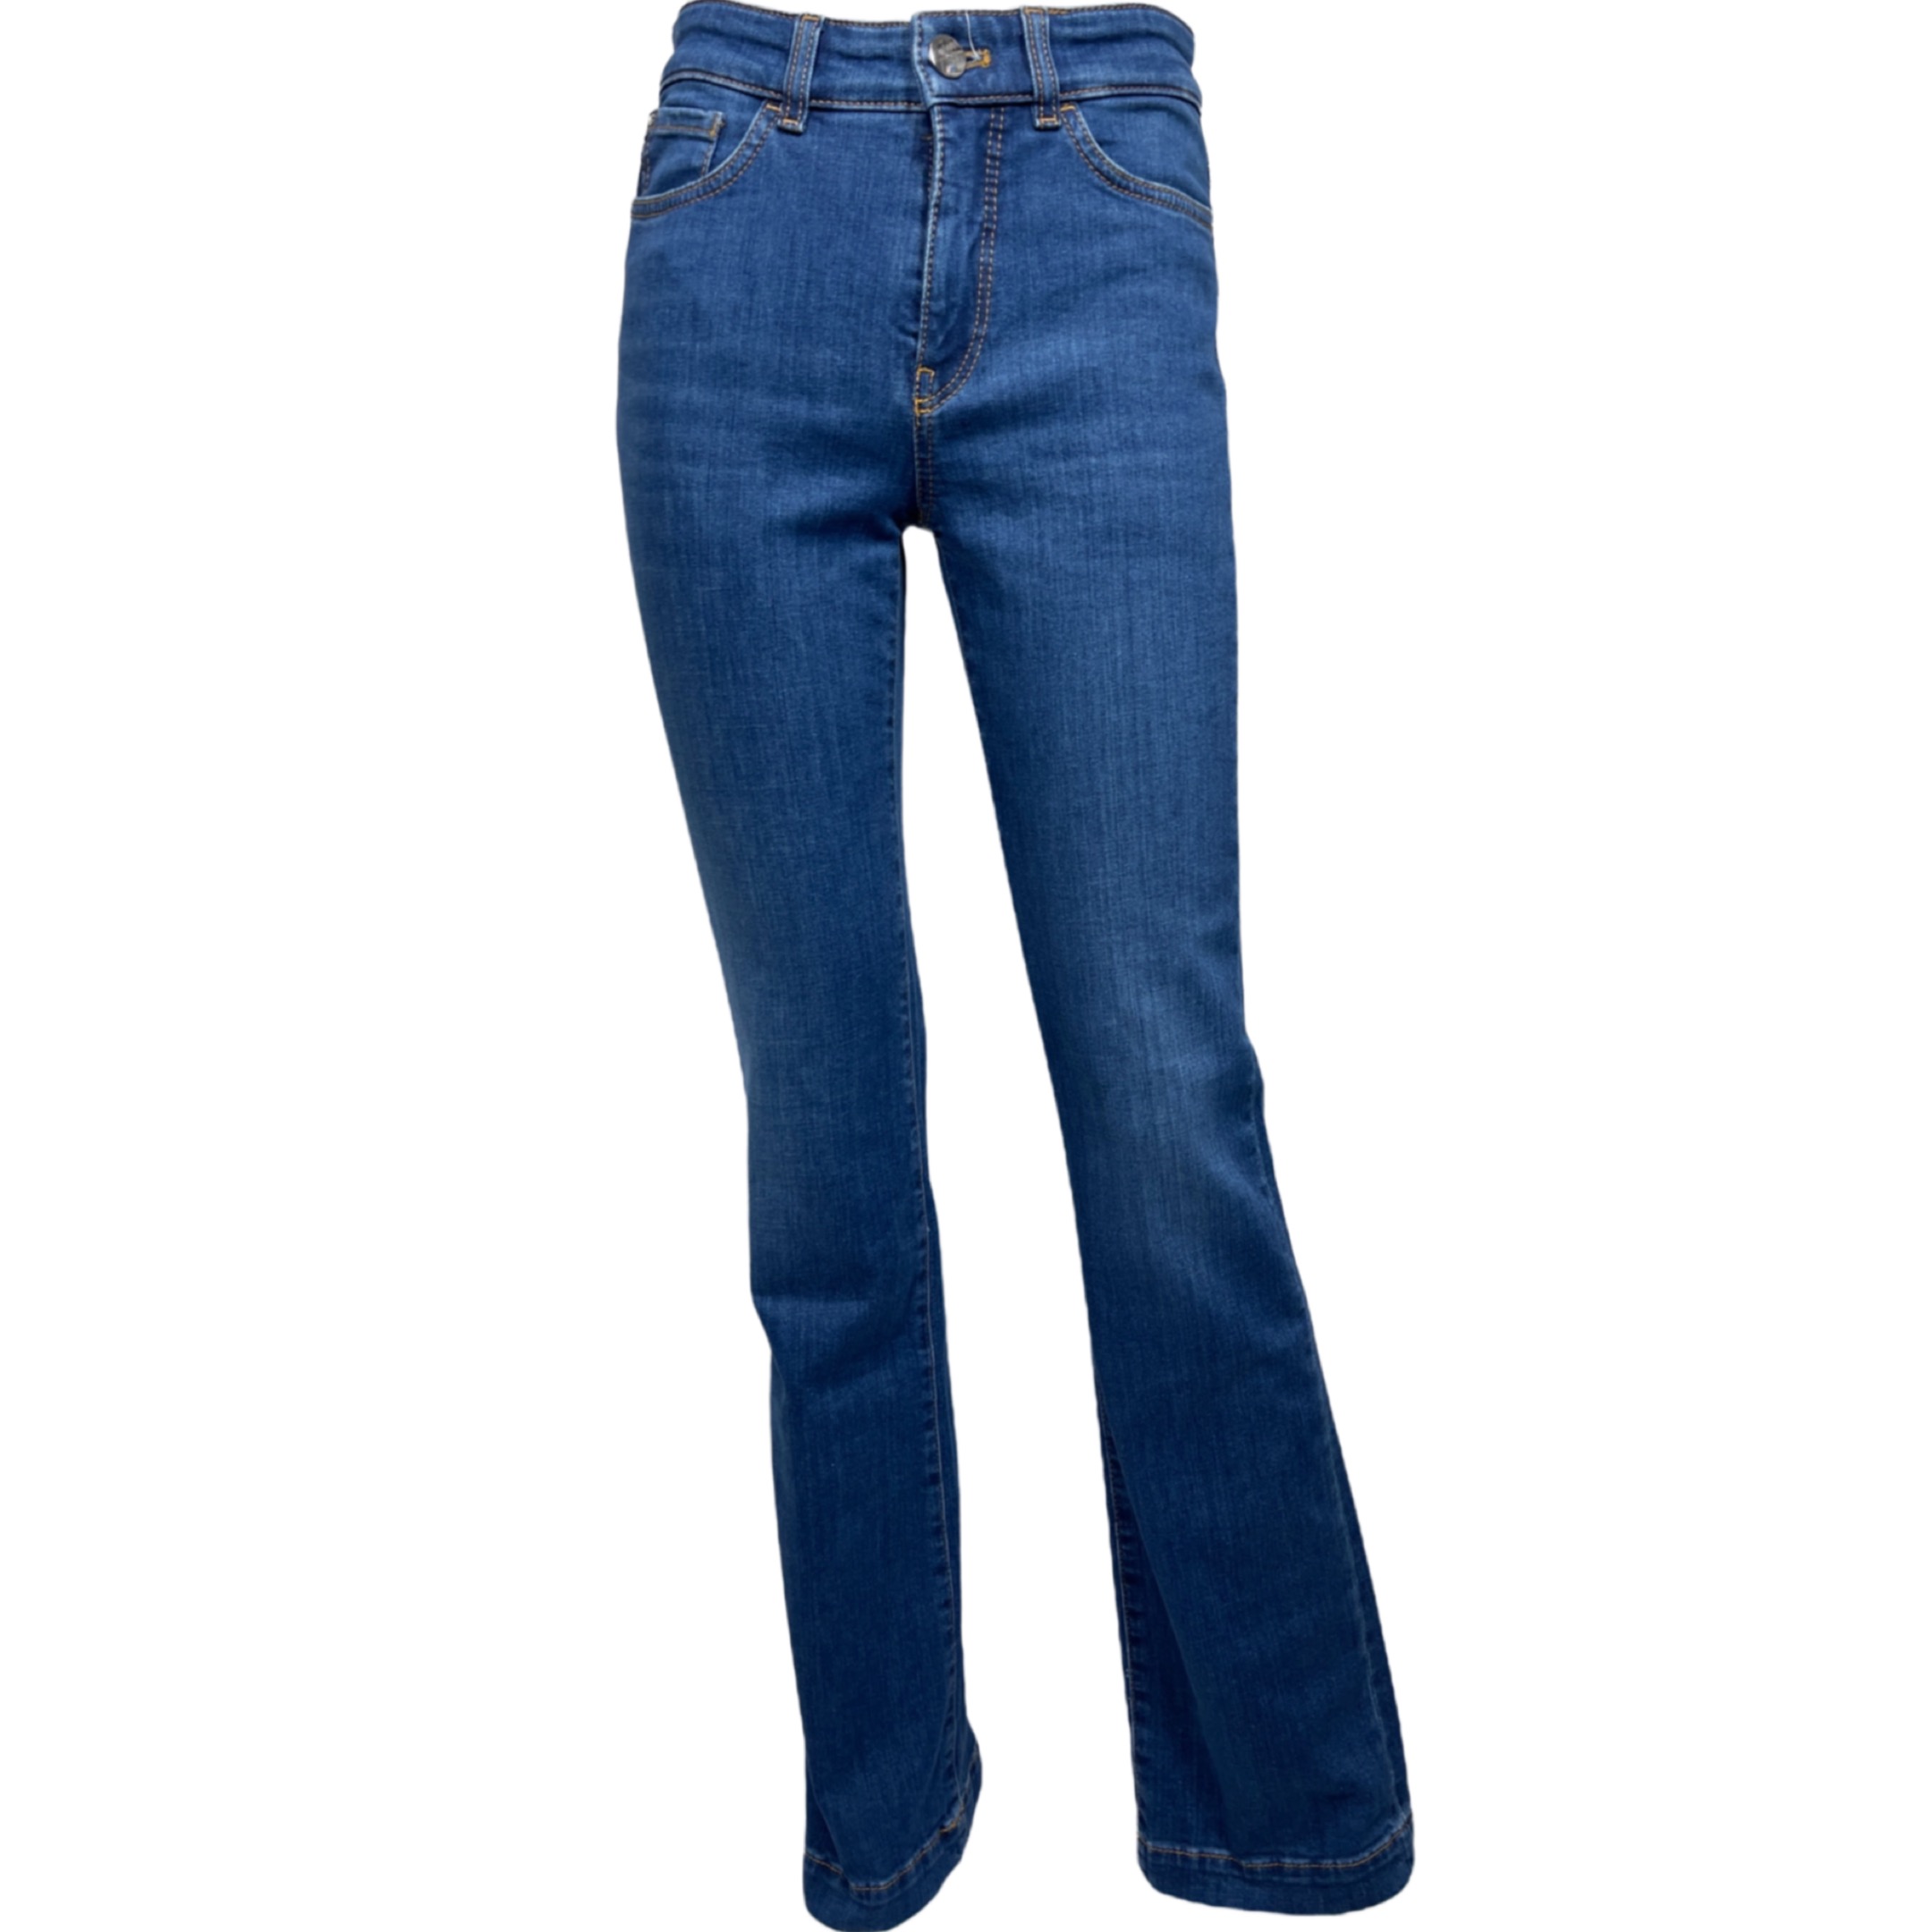 MARC CAIN UP 82.06 D71 Damen Jeans  Bootcut Rethink Together Faro Feminine fit Blau 353